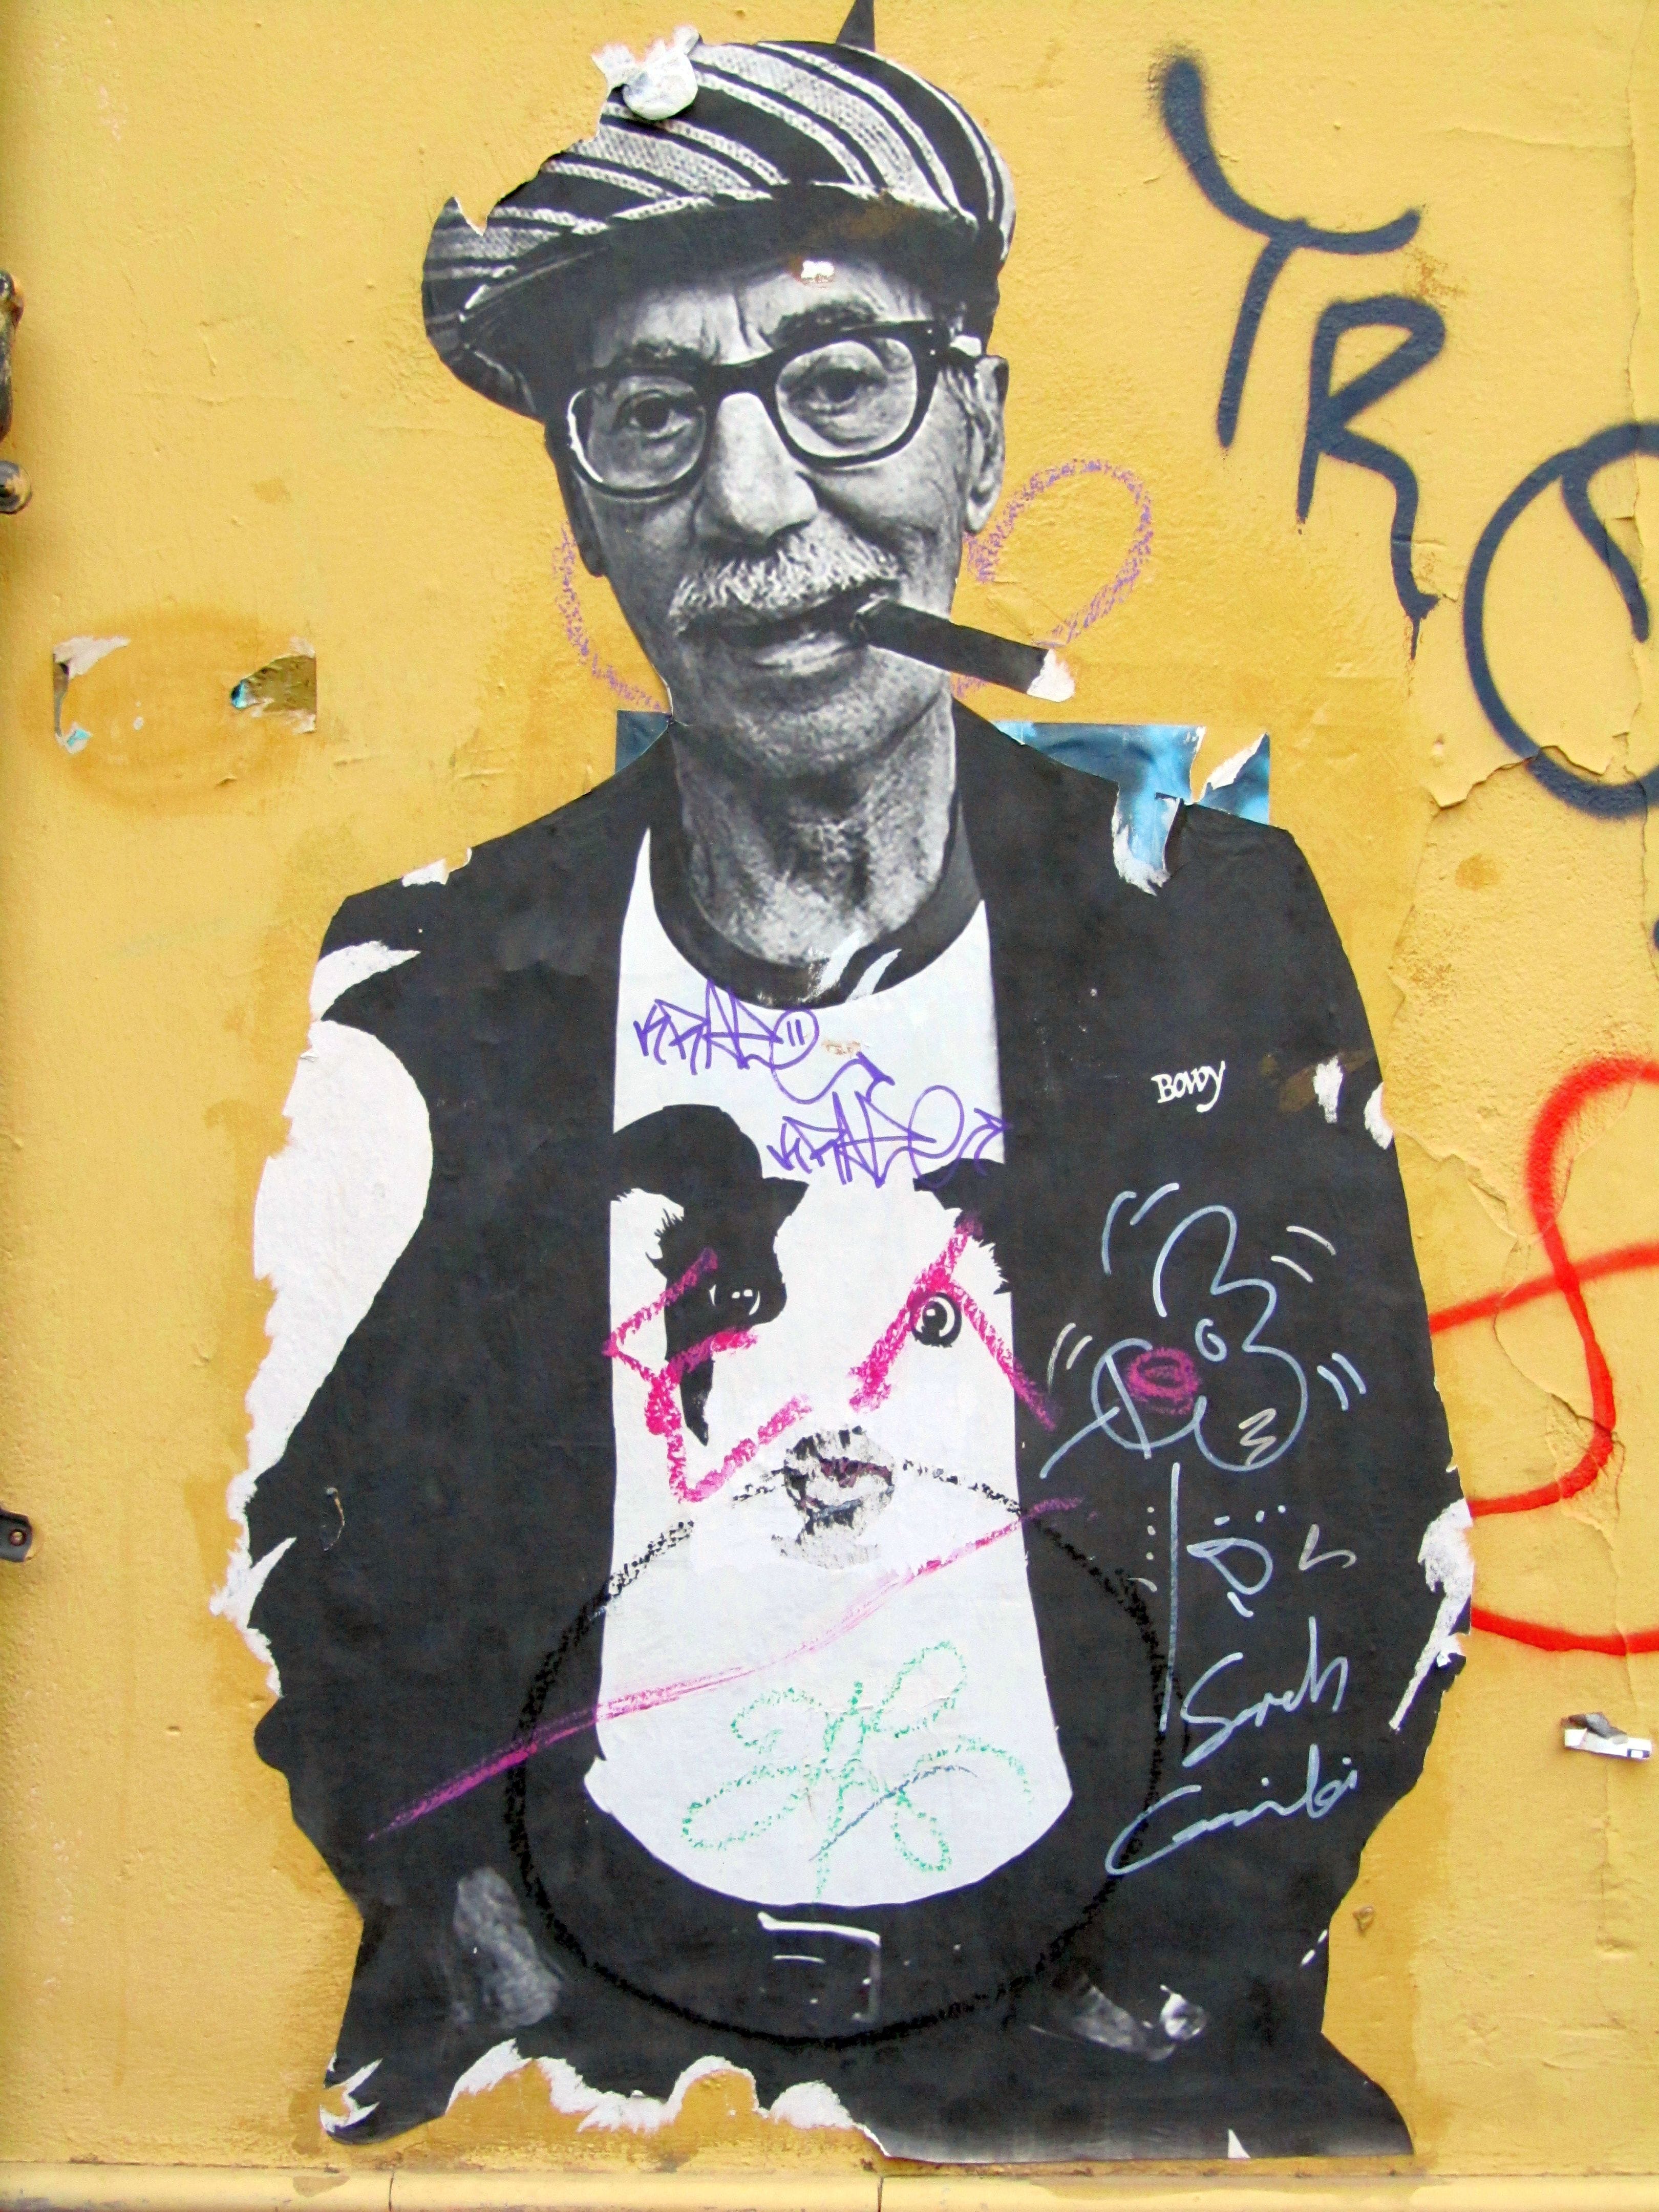 Graffiti 4689  by the artist Bowy captured by elettrotajik in València Spain